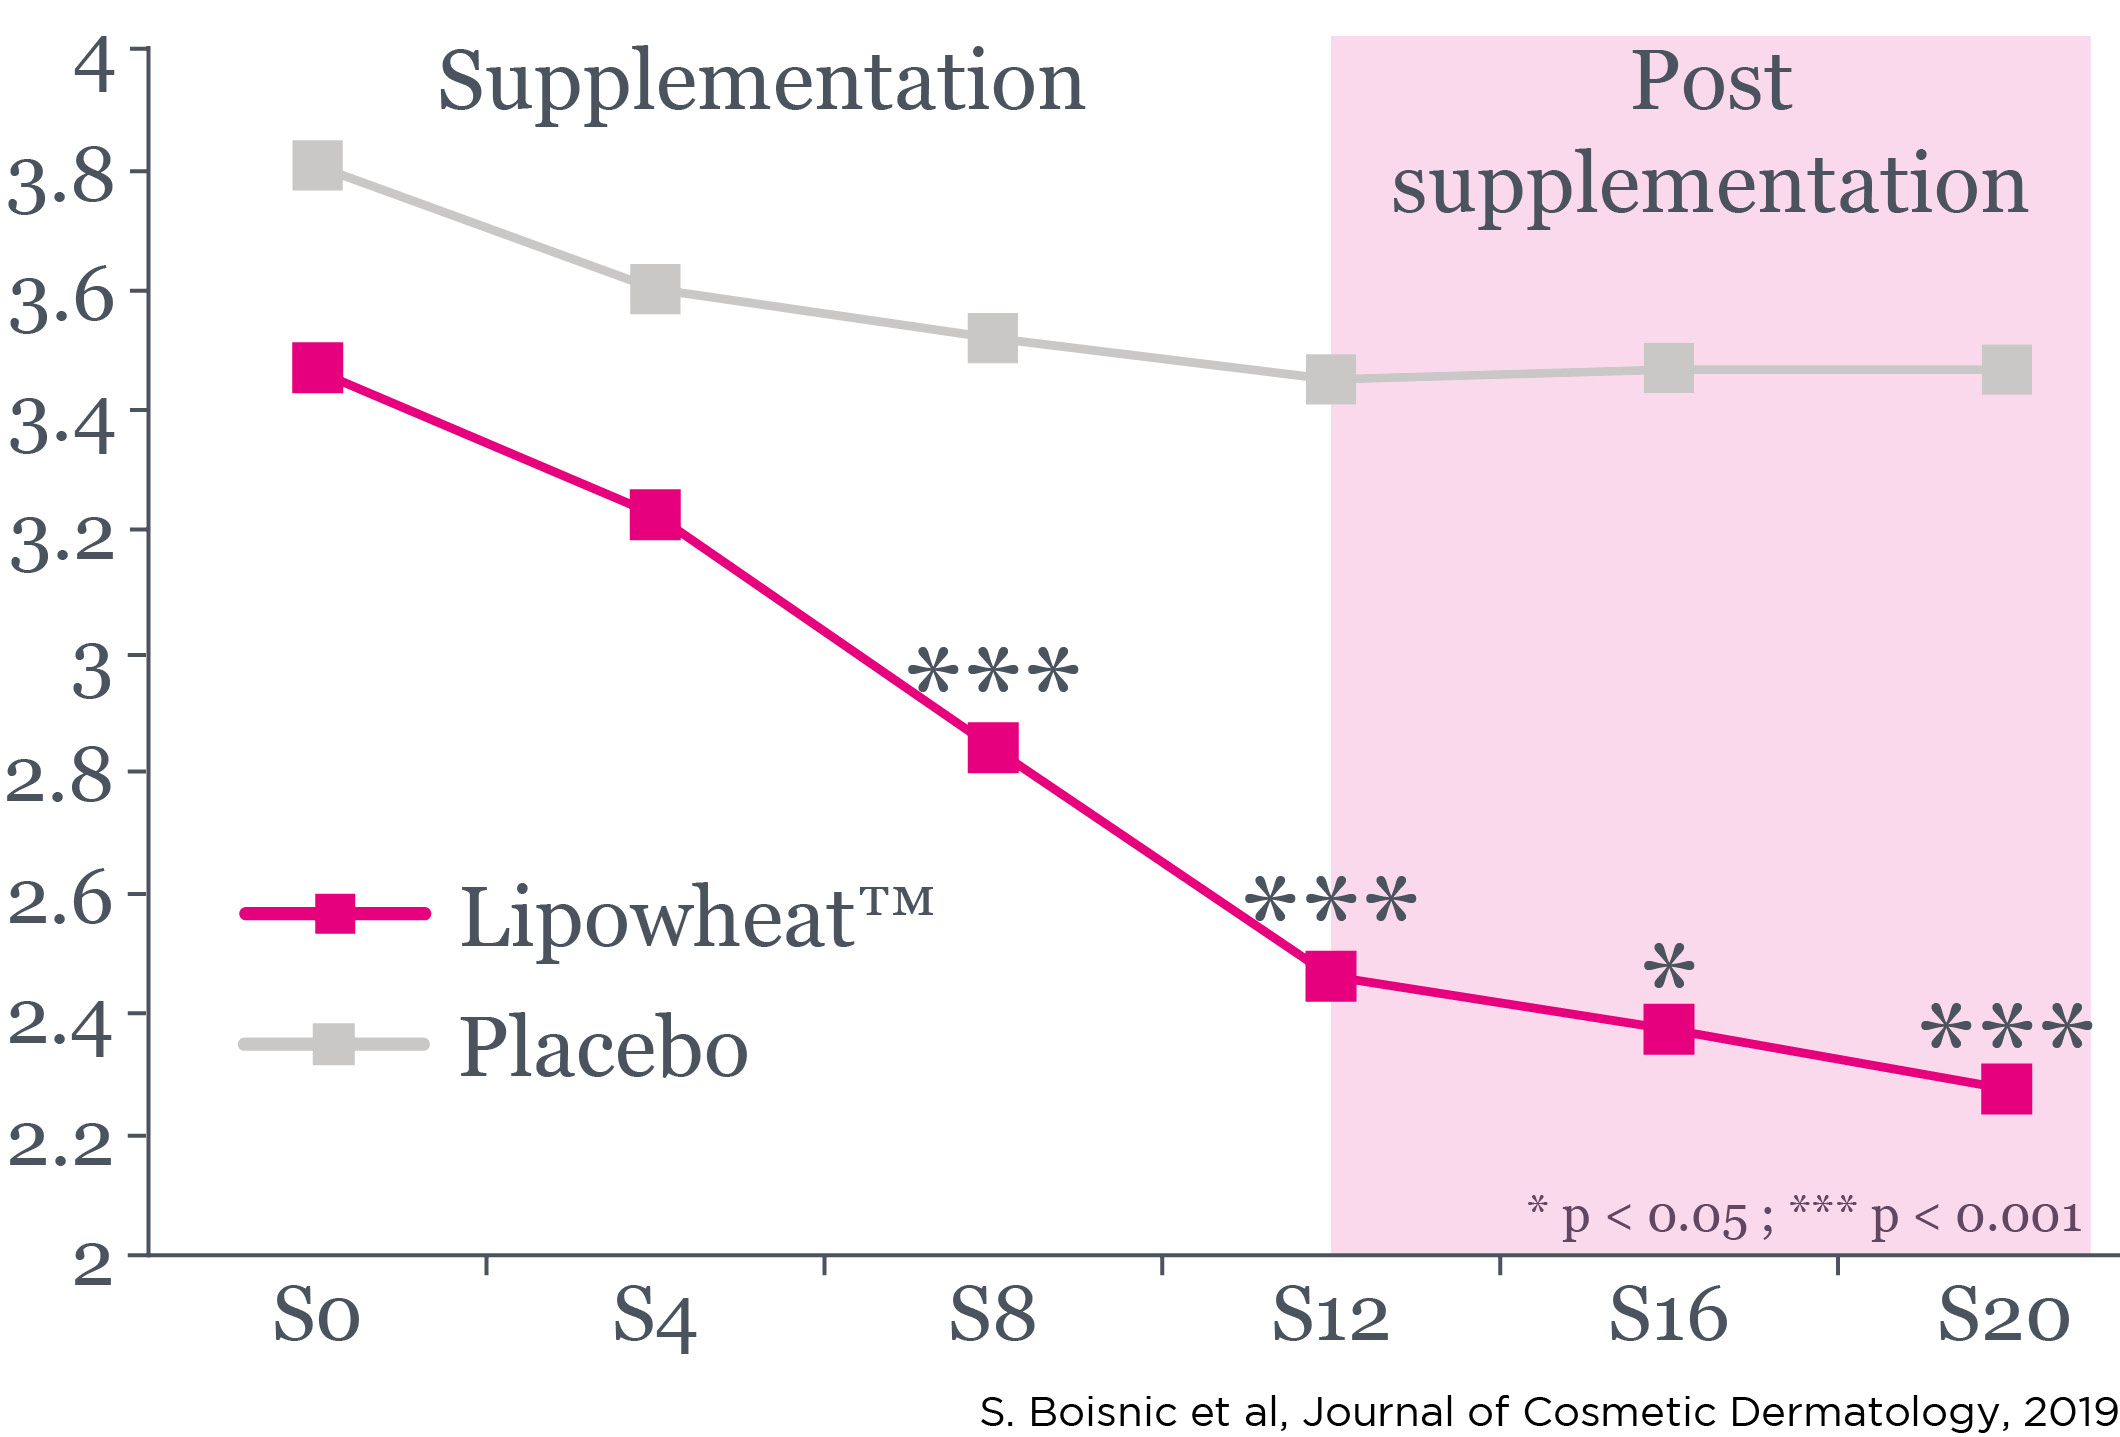 graphique post supplementation - lipowheat